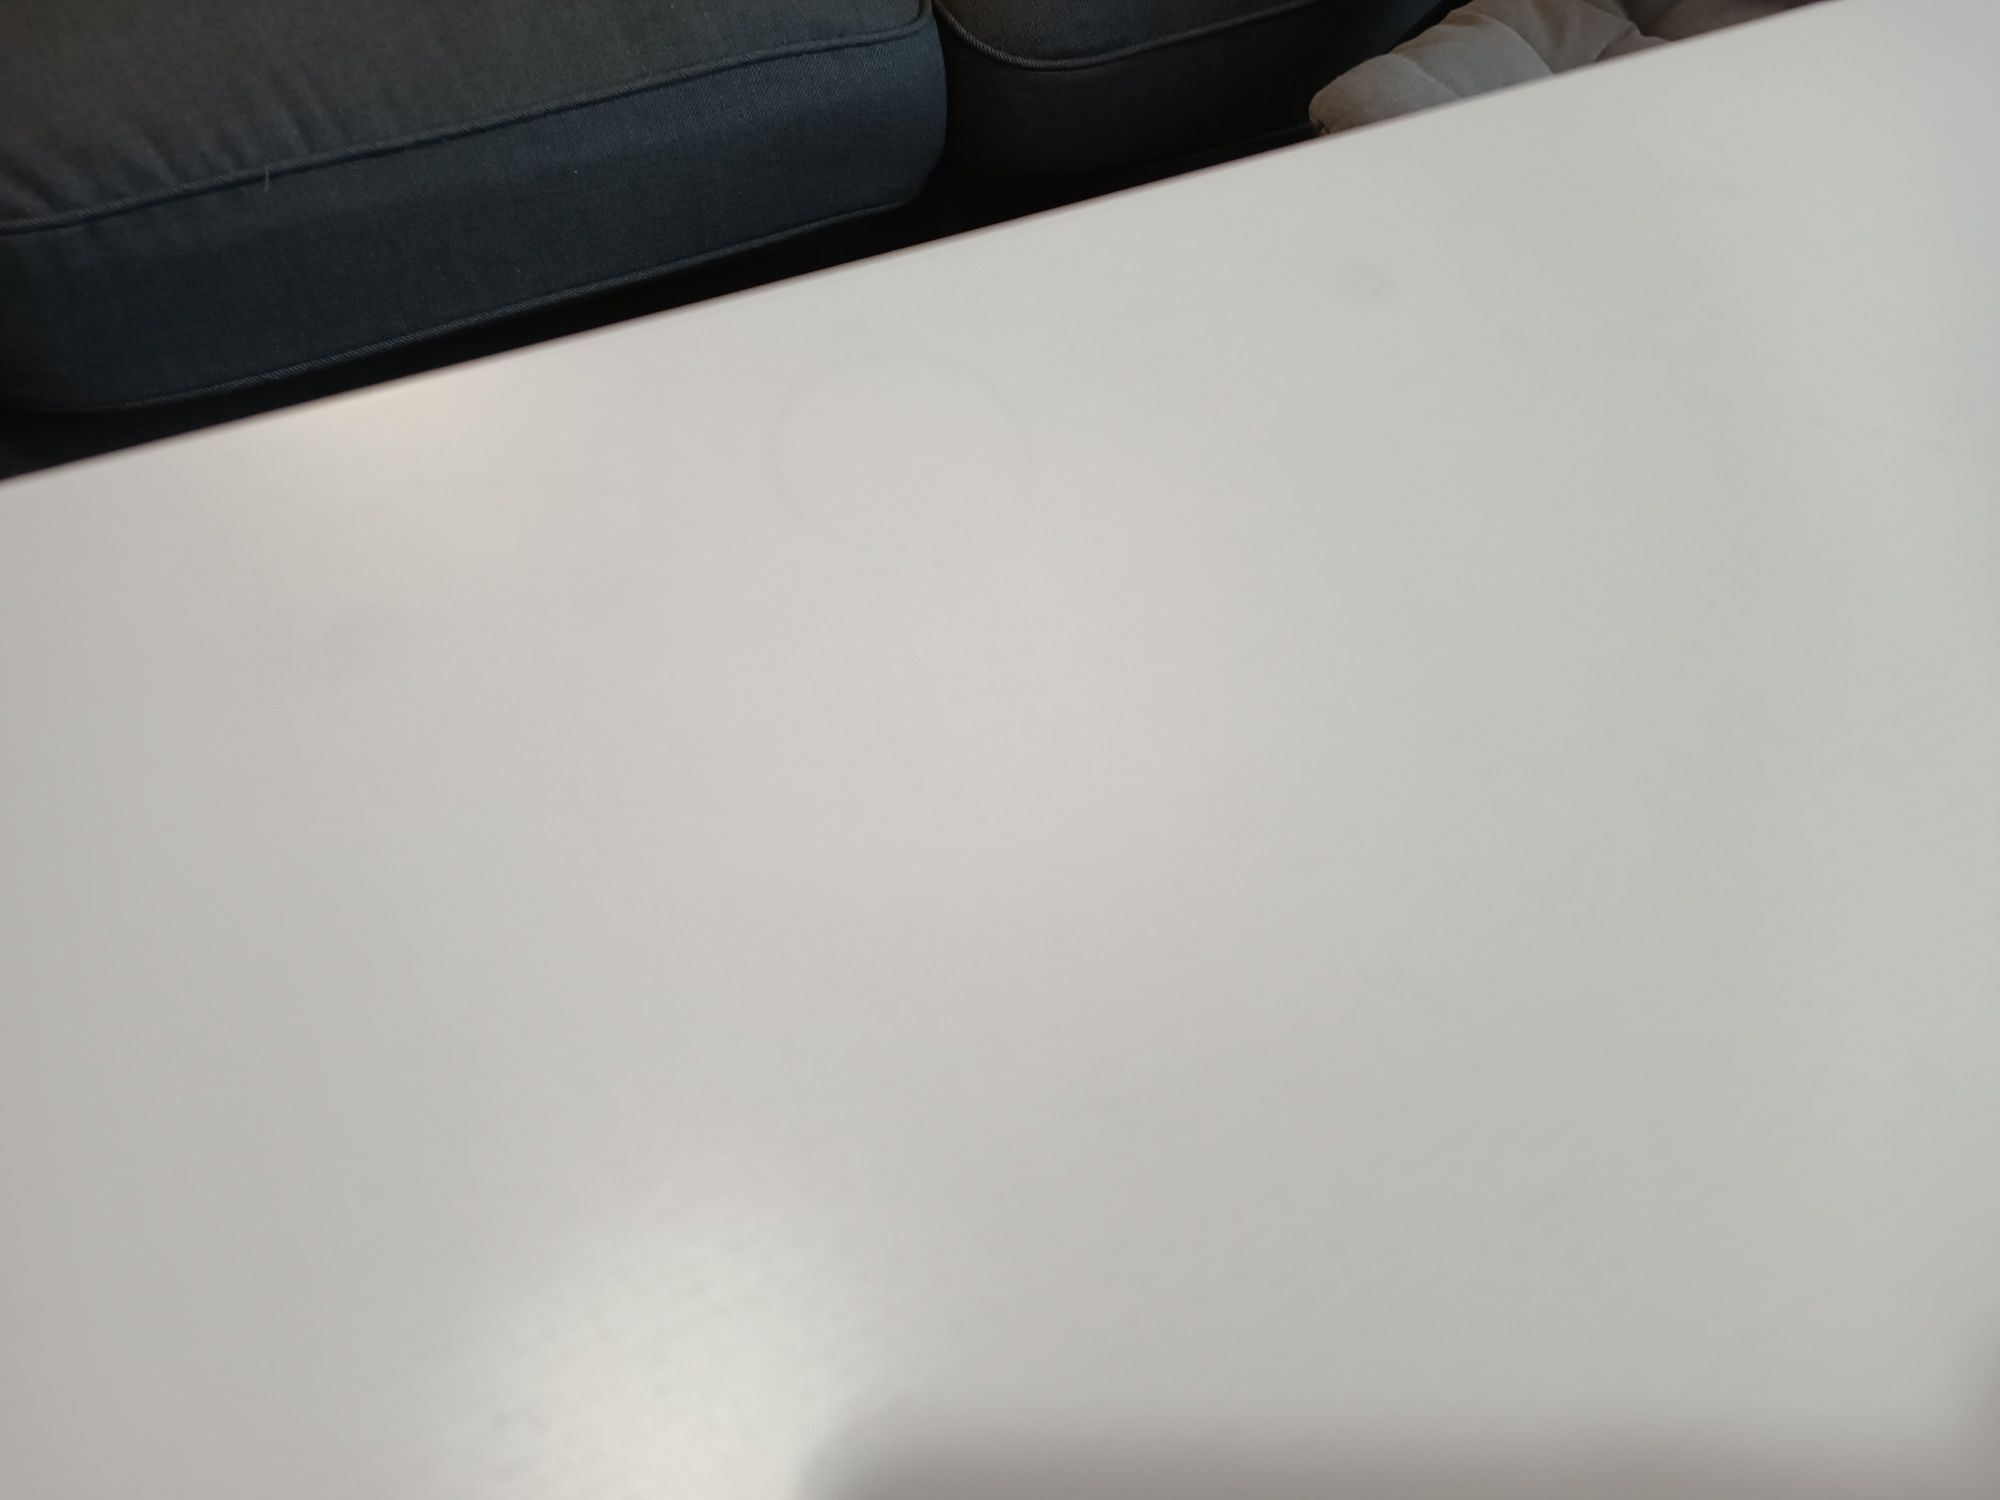 Stół ekedalen Ikea